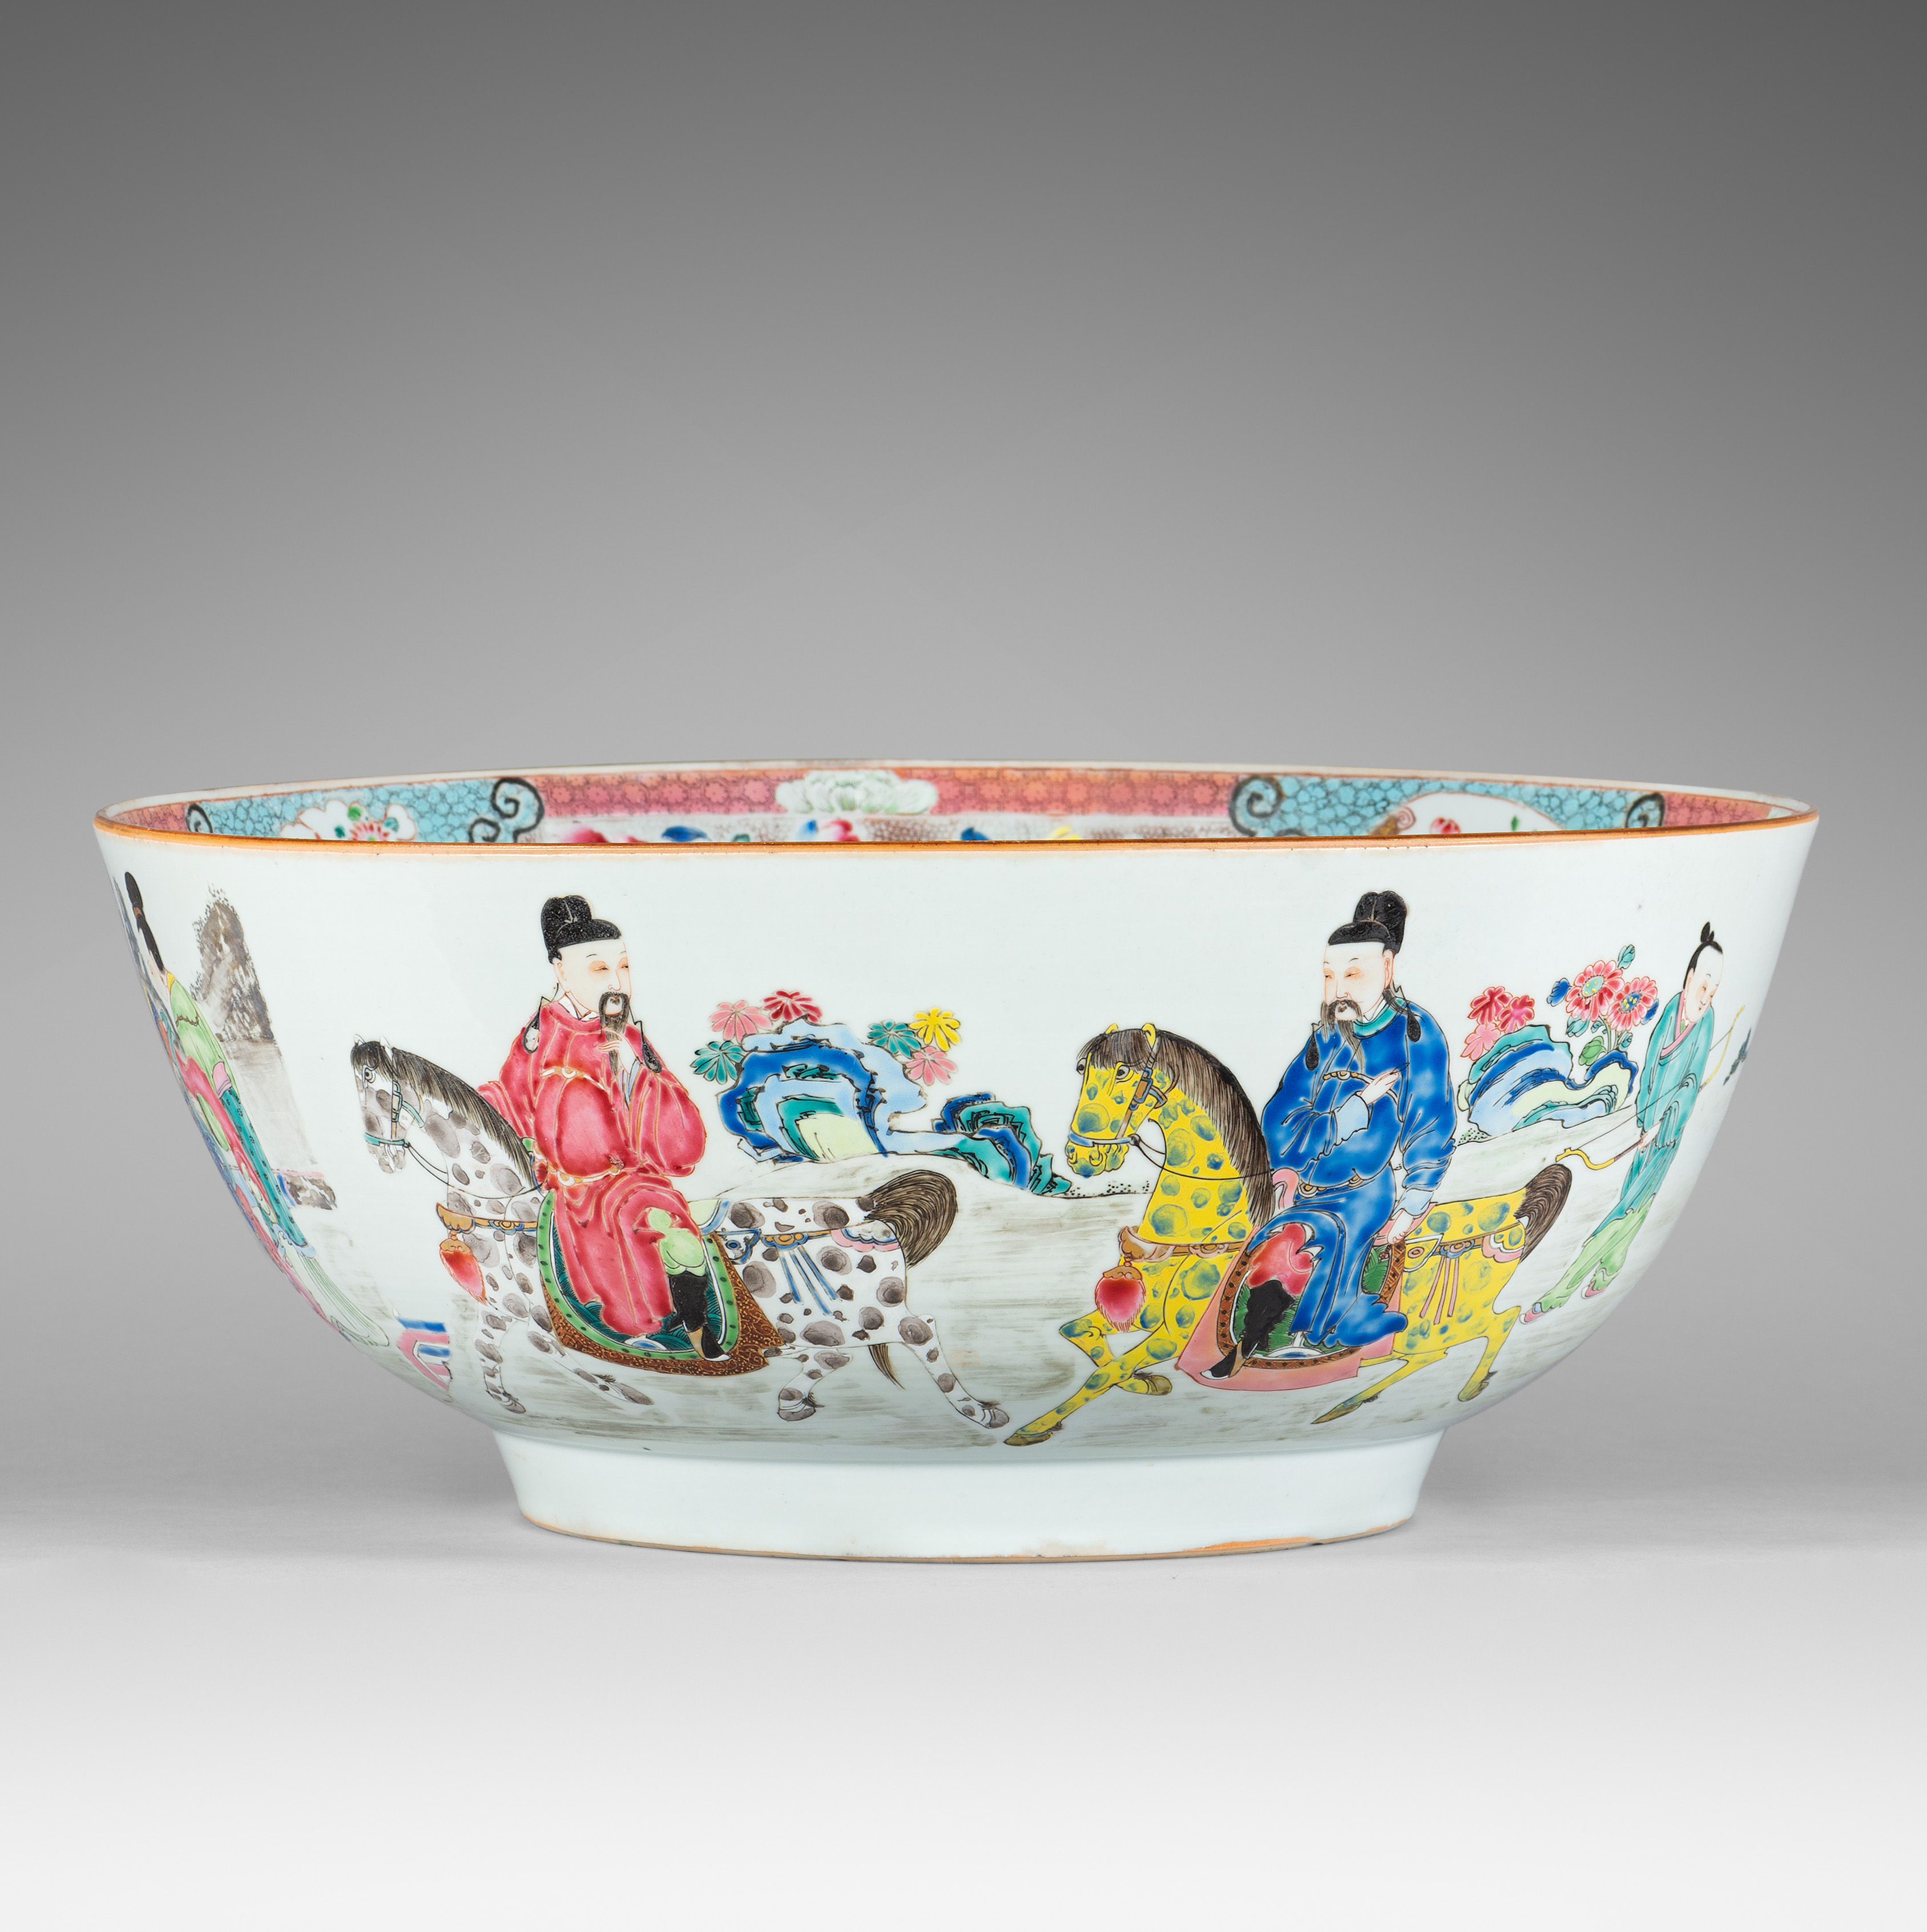 Famille rose Porcelain Yongzheng period (1723-1735), circa 1730/1735, China